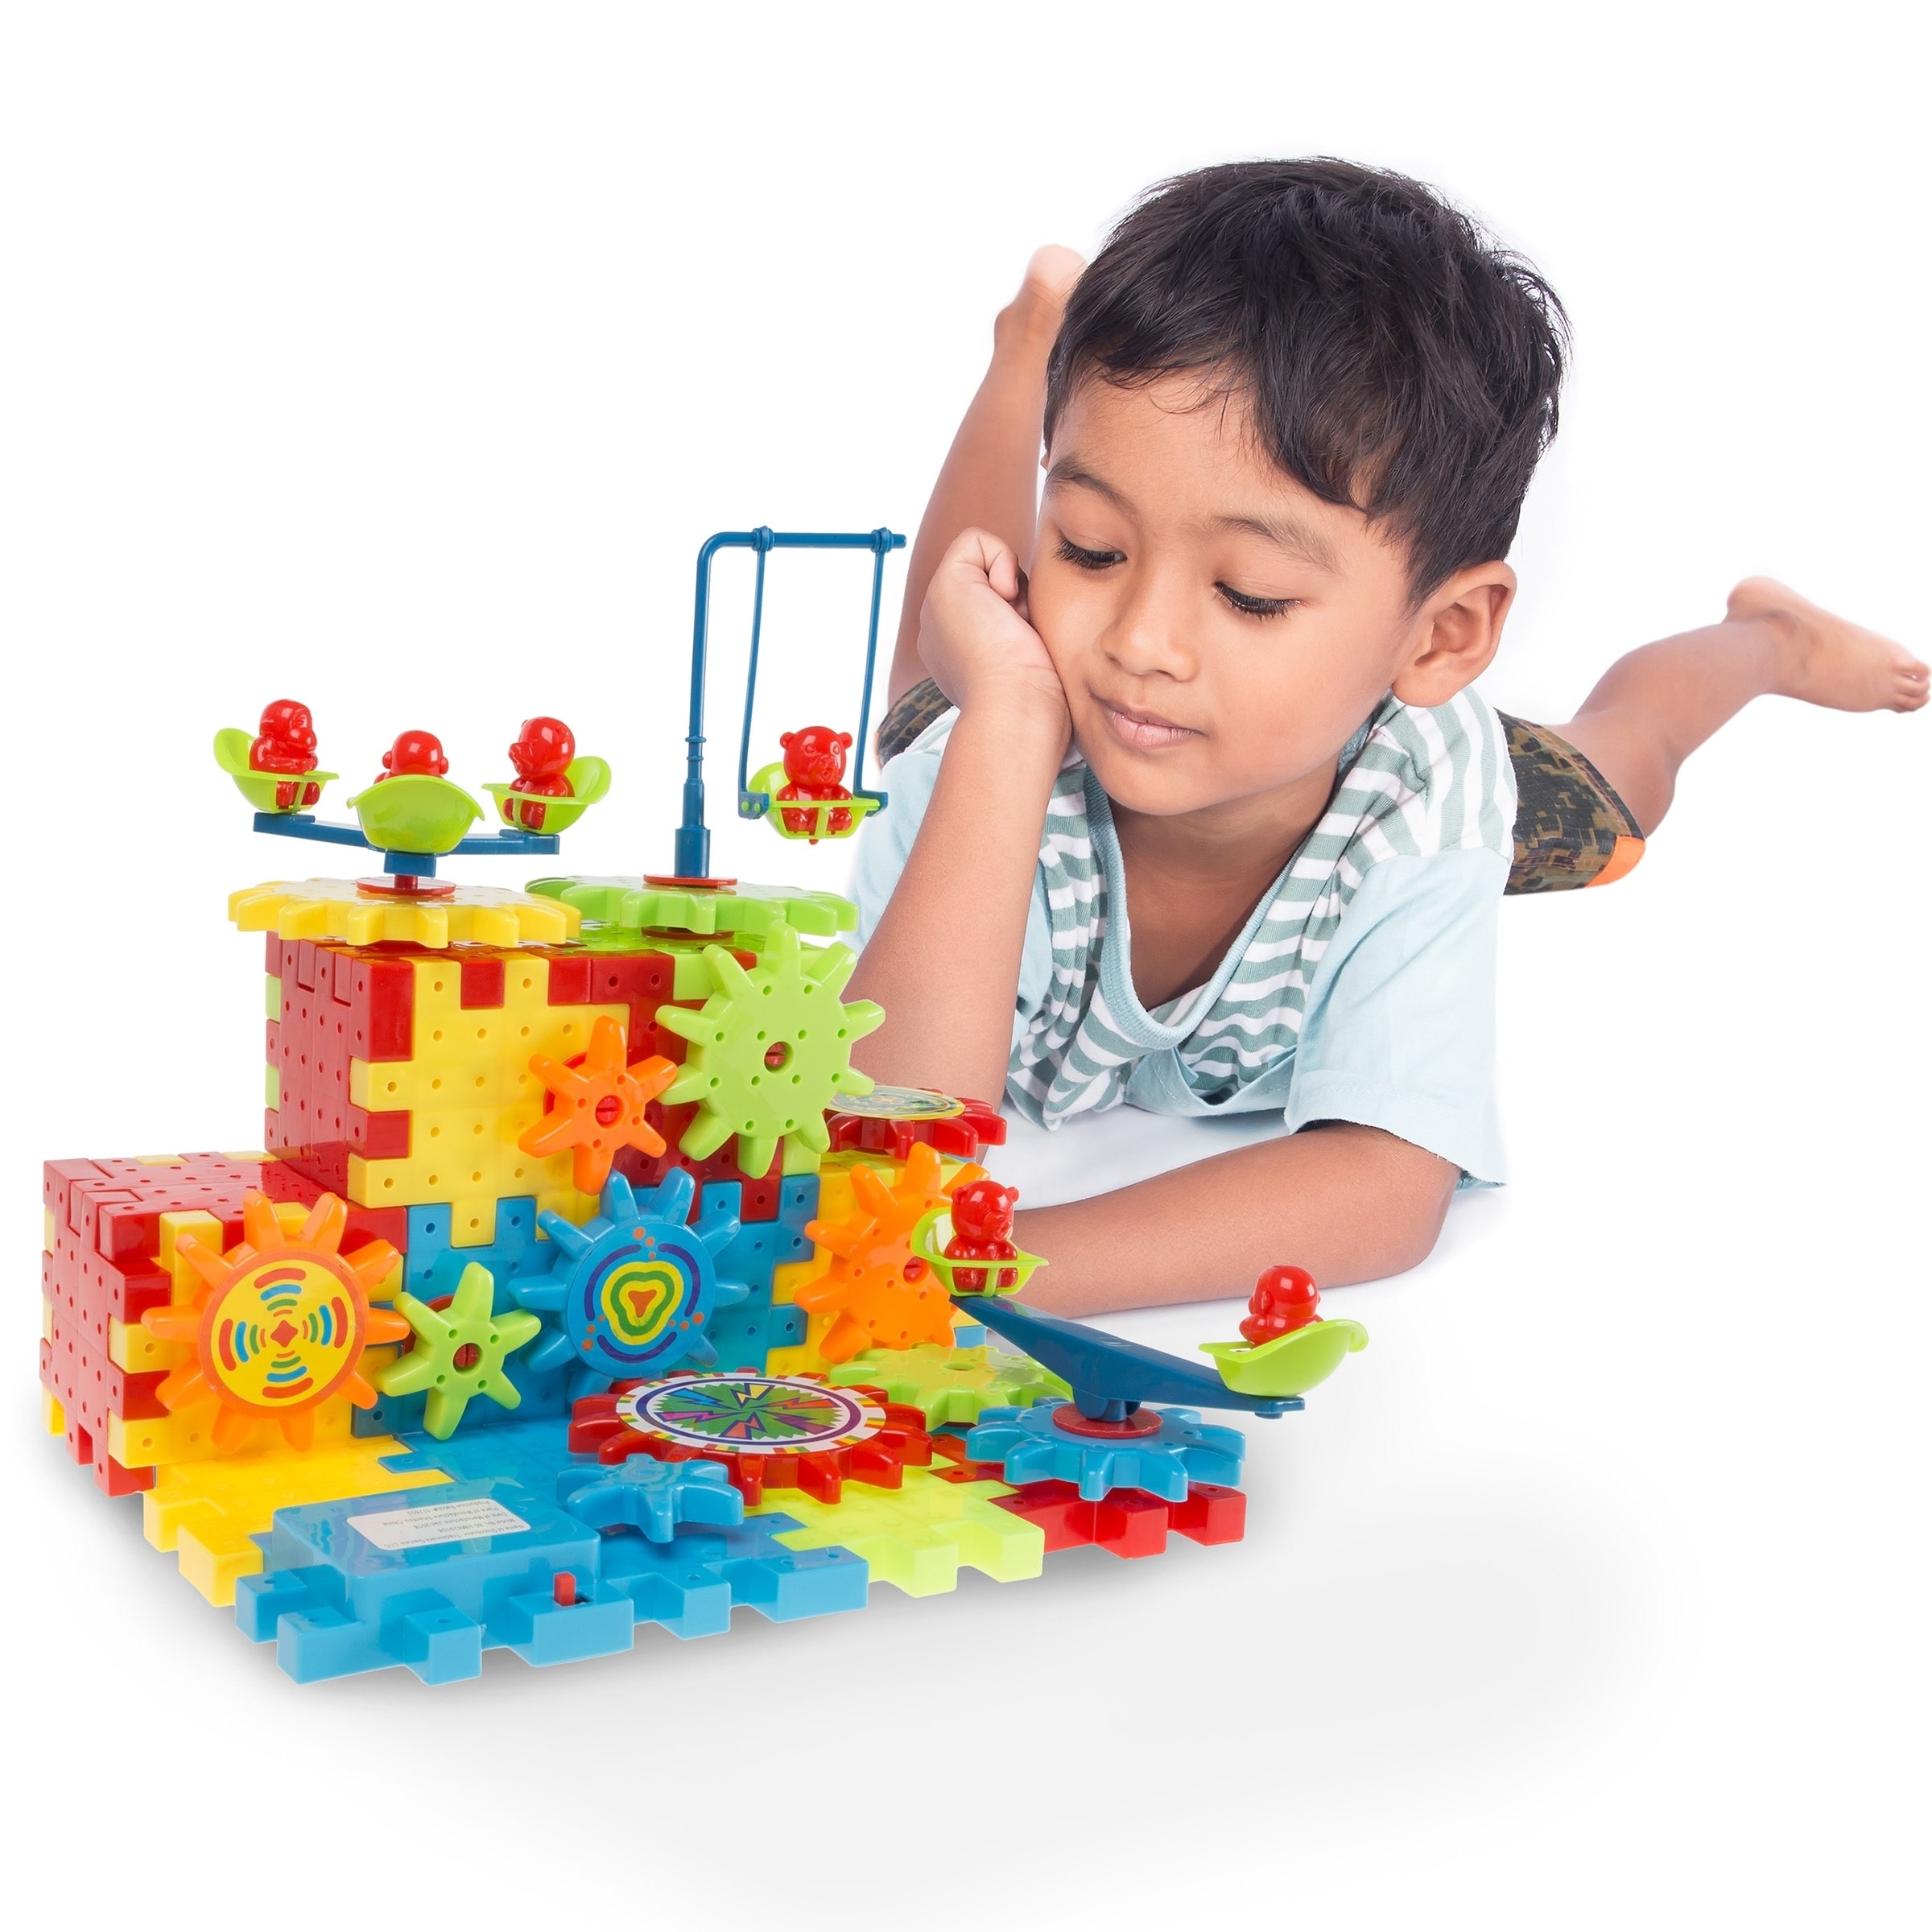 interlocking blocks for children